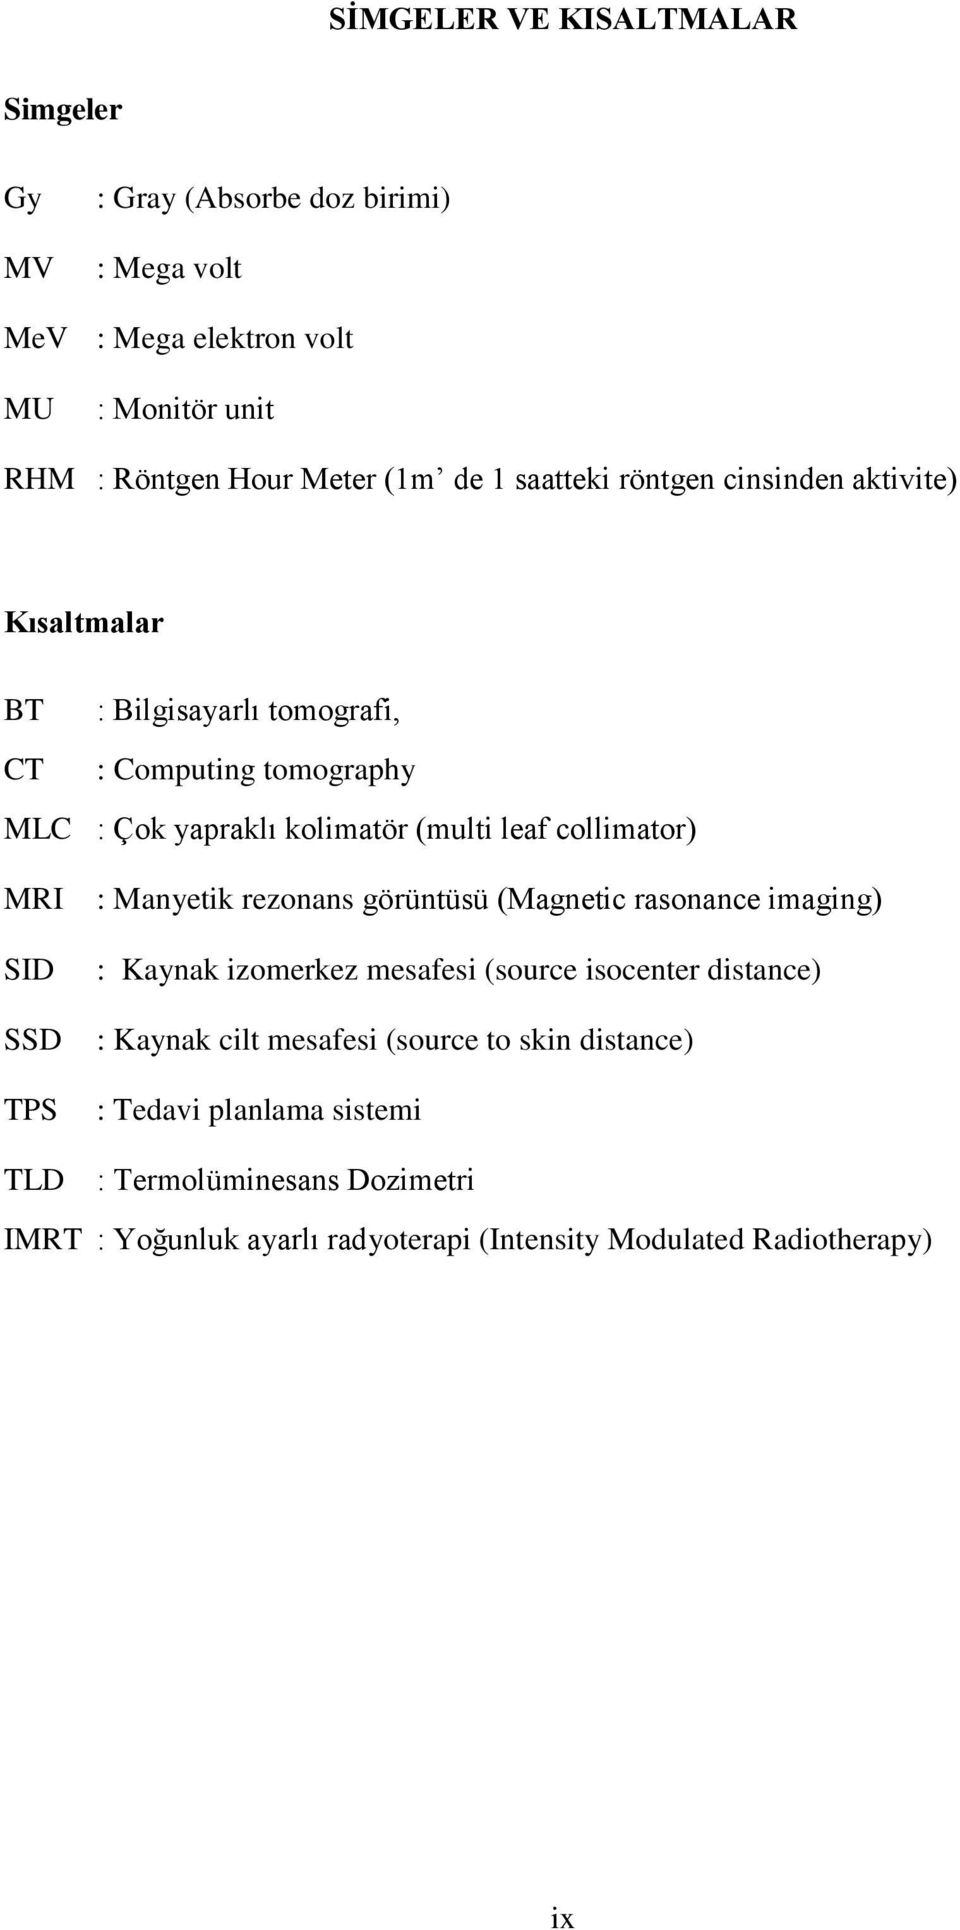 collimator) MRI SID SSD TPS : Manyetik rezonans görüntüsü (Magnetic rasonance imaging) : Kaynak izomerkez mesafesi (source isocenter distance) : Kaynak